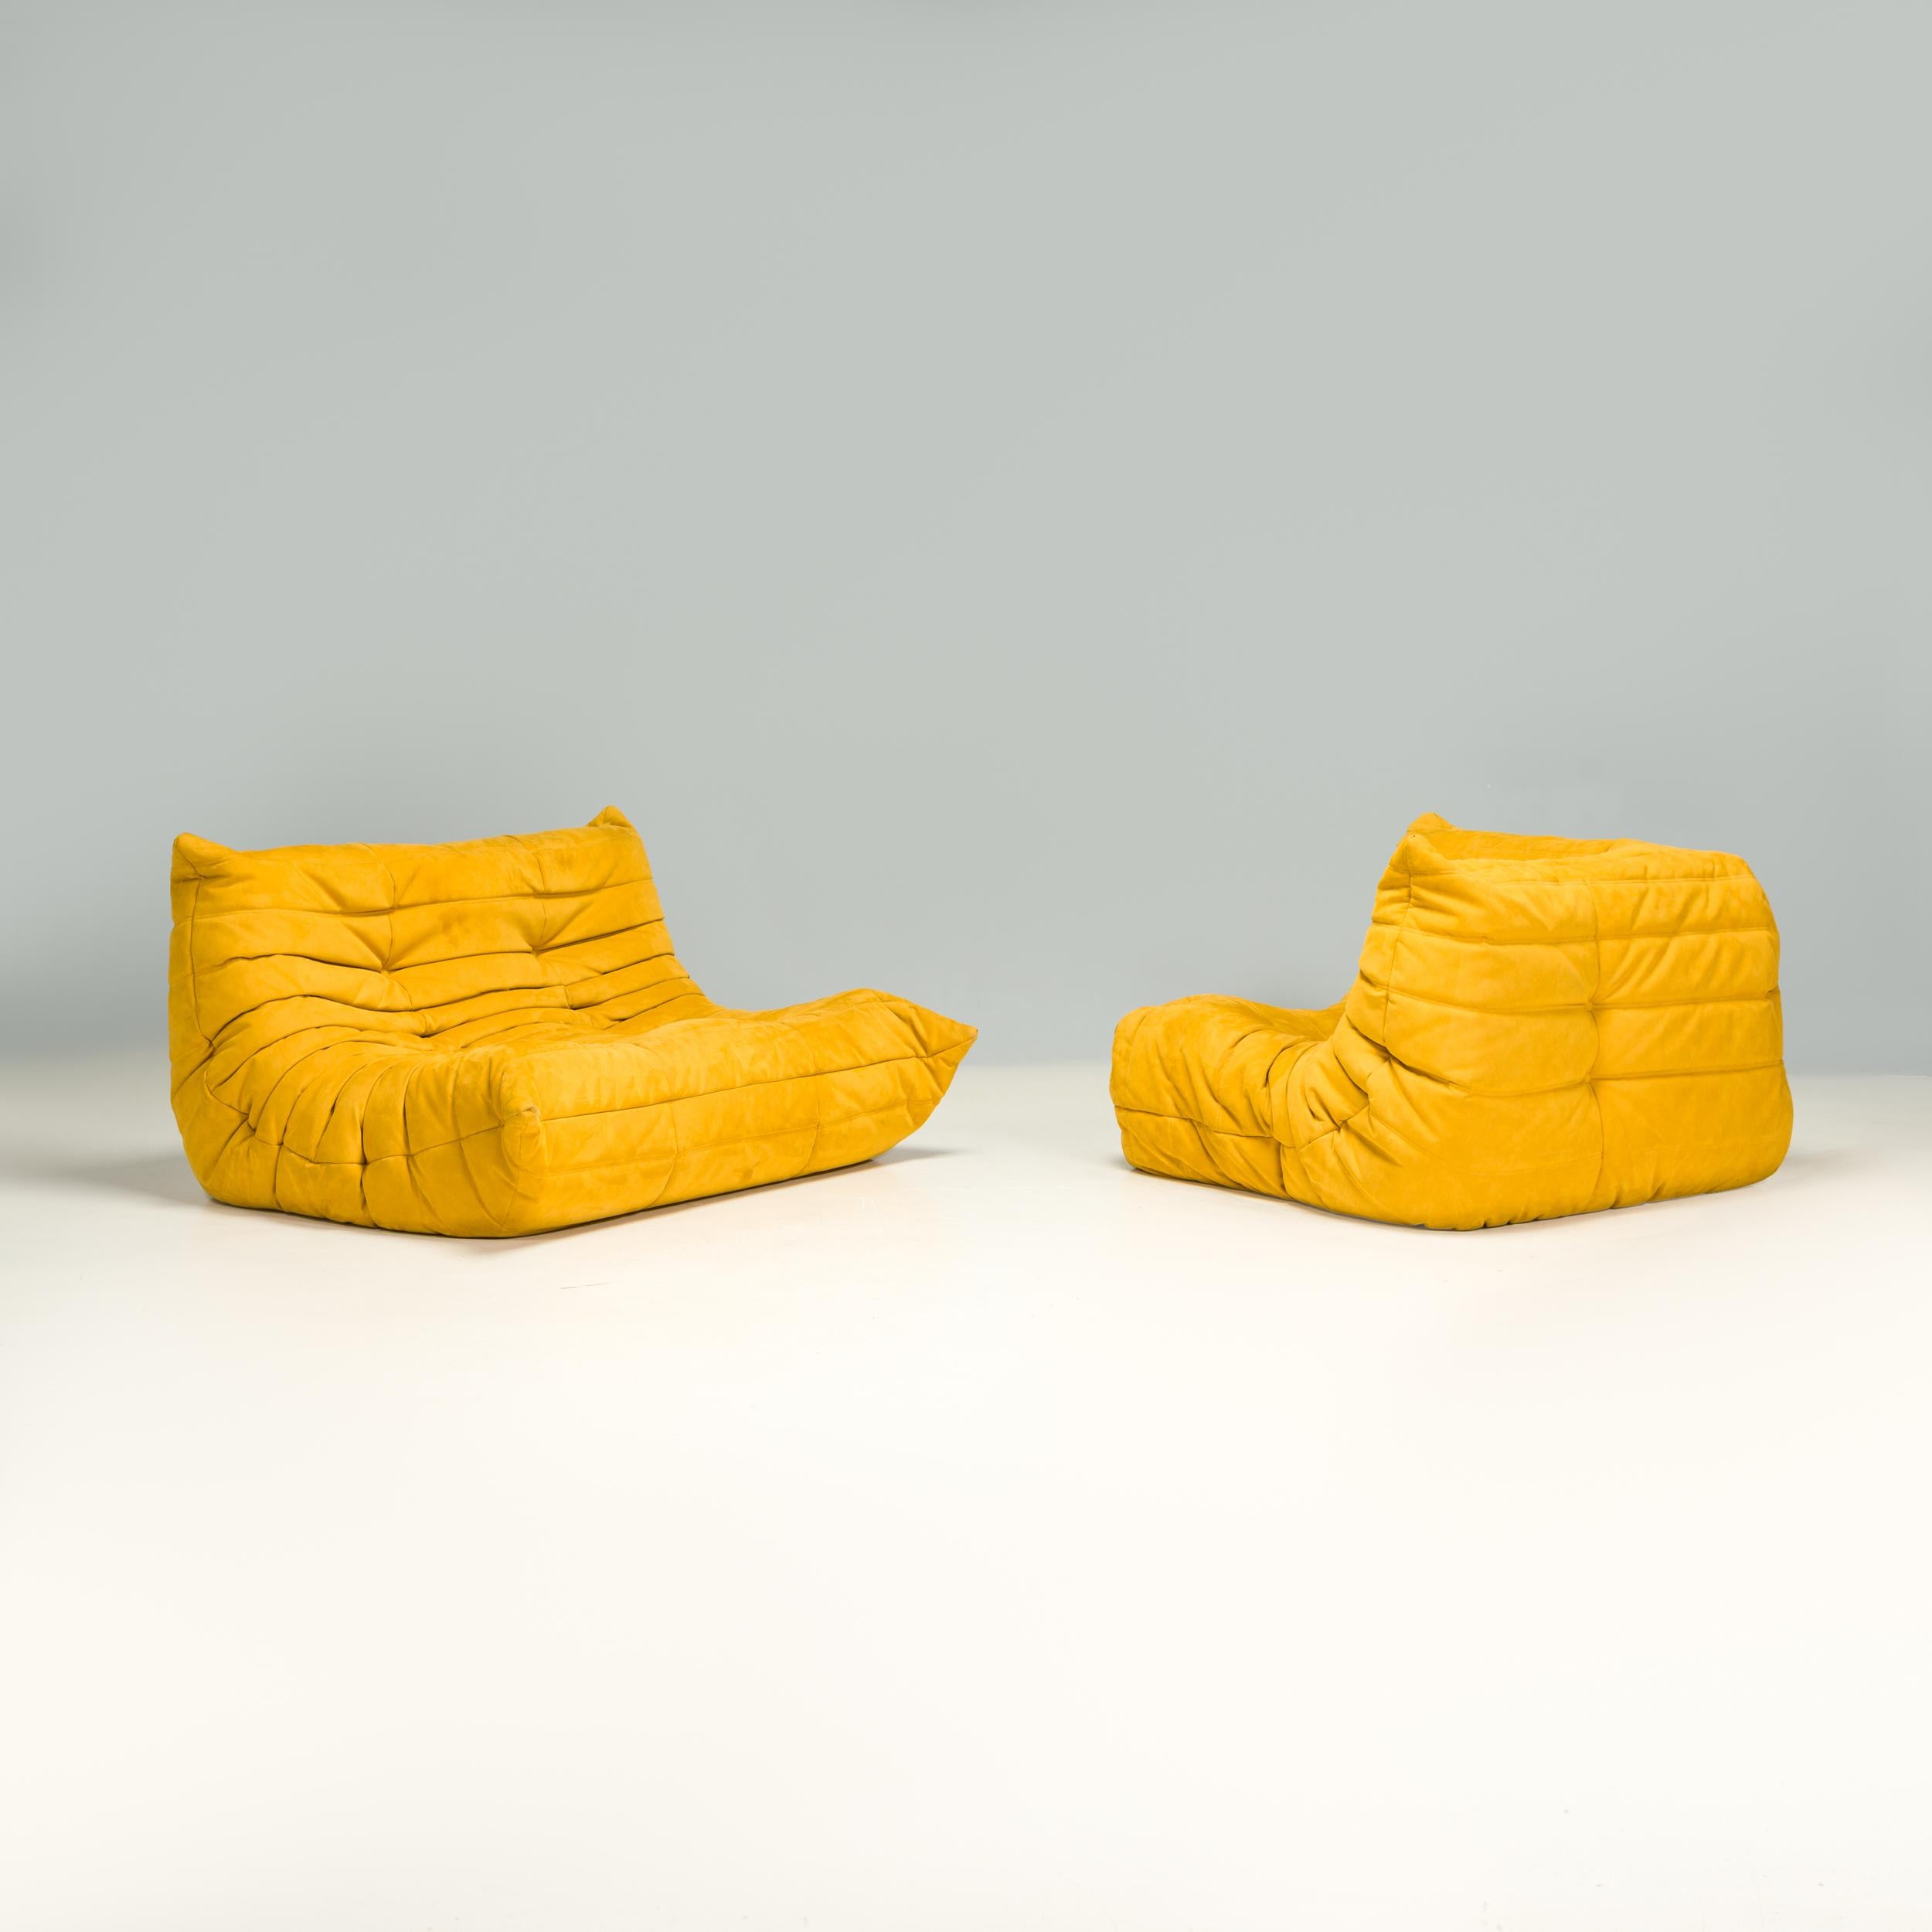 French  Ligne Roset by Michel Ducaroy Togo Yellow Alcantara Modular Sofas, Set of 5